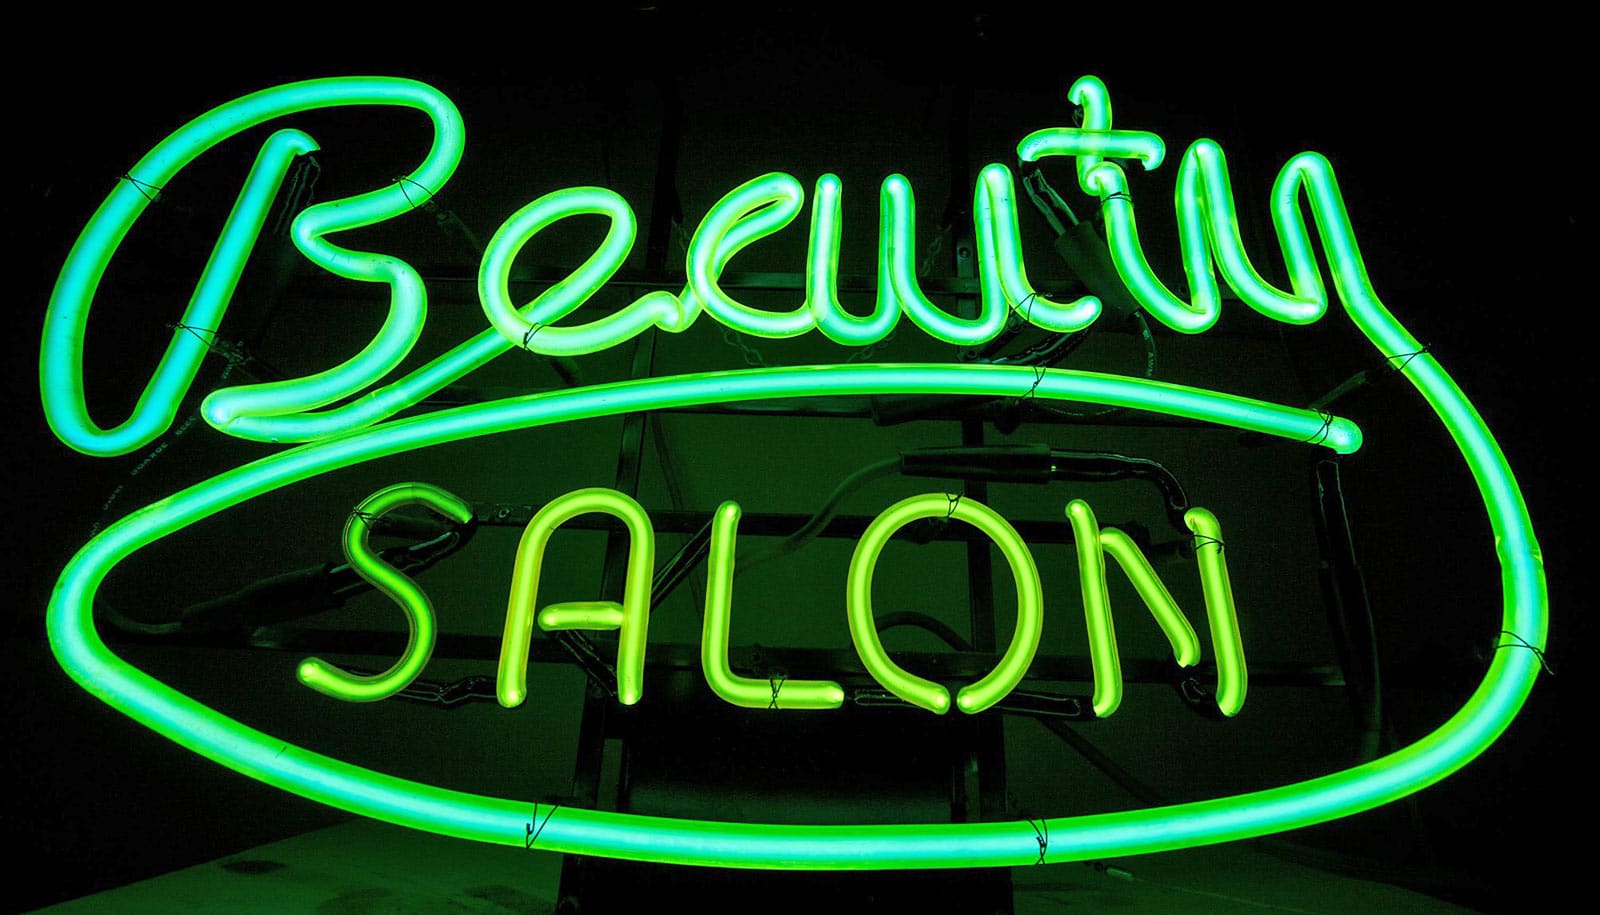 A green neon sign reads "Beauty salon."